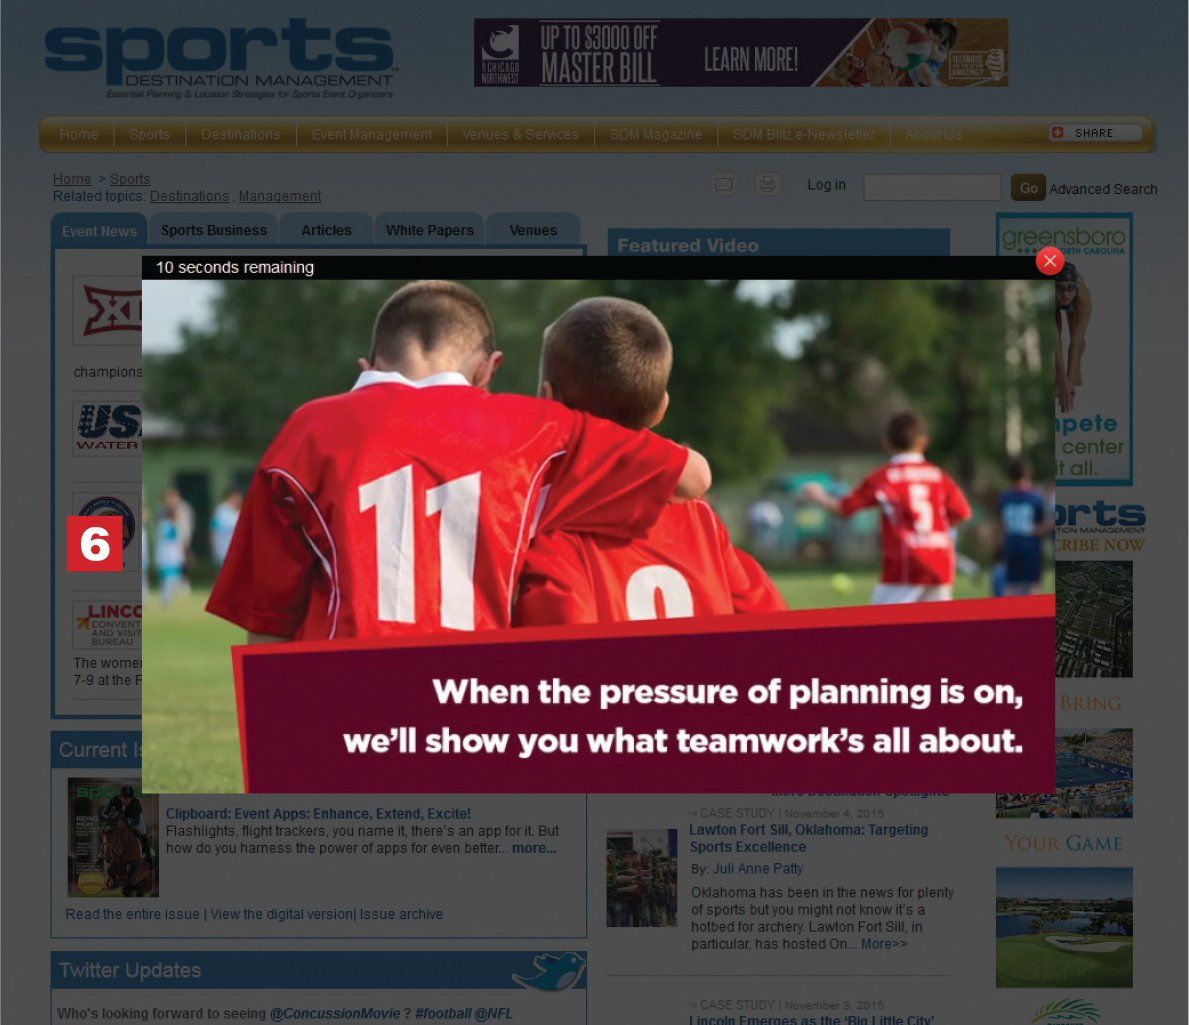 Sportsdestinations.com Website Picture of a Video Ad